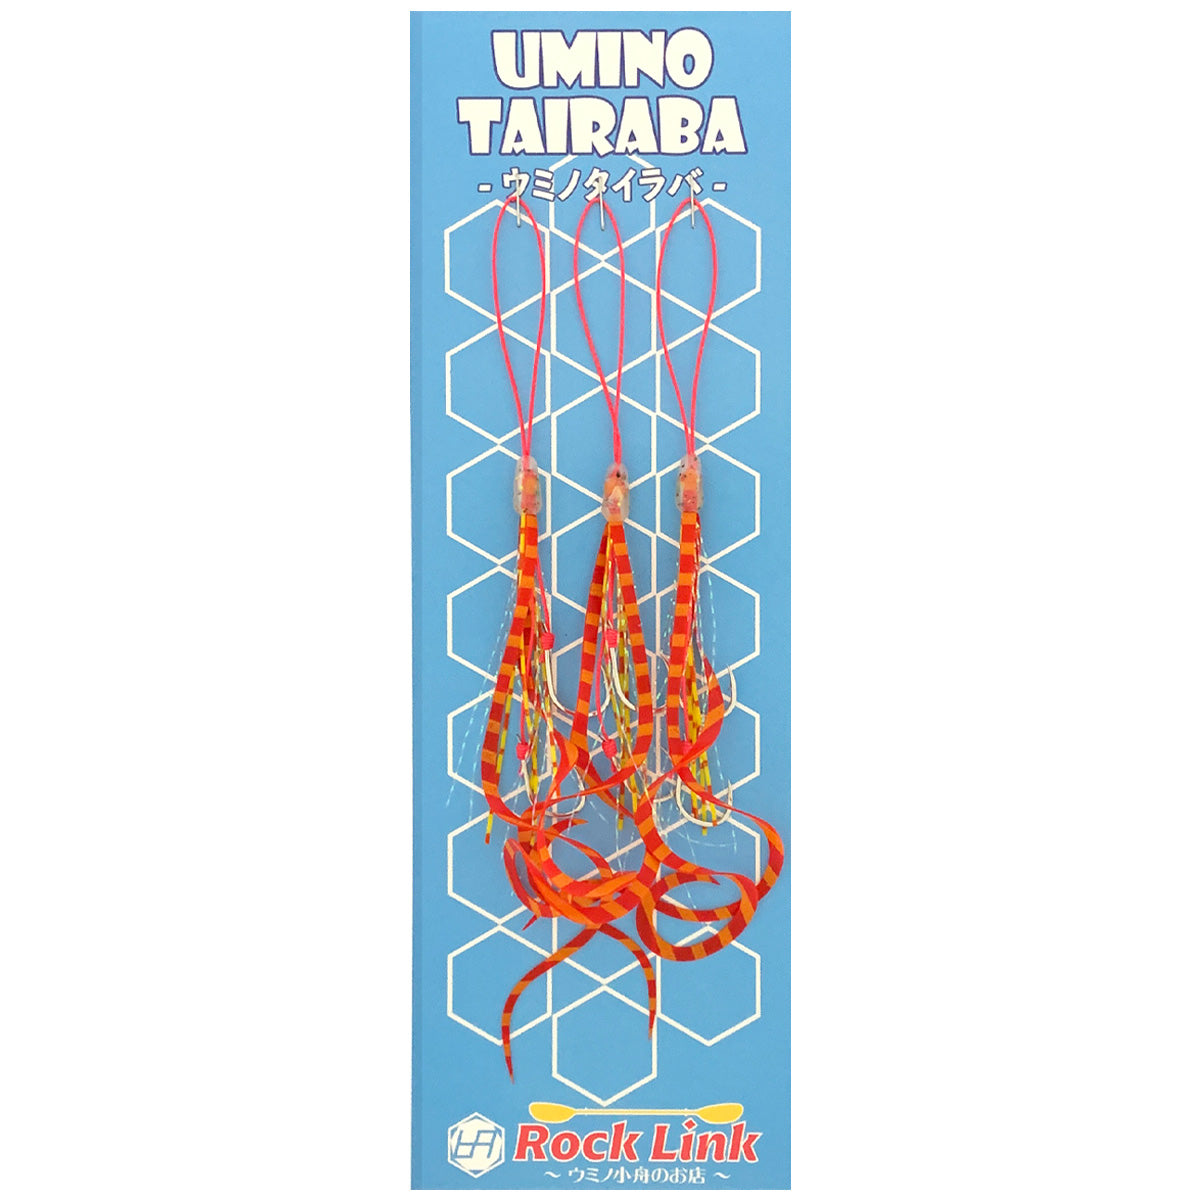 UMINO (ウミノ) タイラバ ビビ 微波動ネクタイ 極細アシメツインカーリー 3セット入